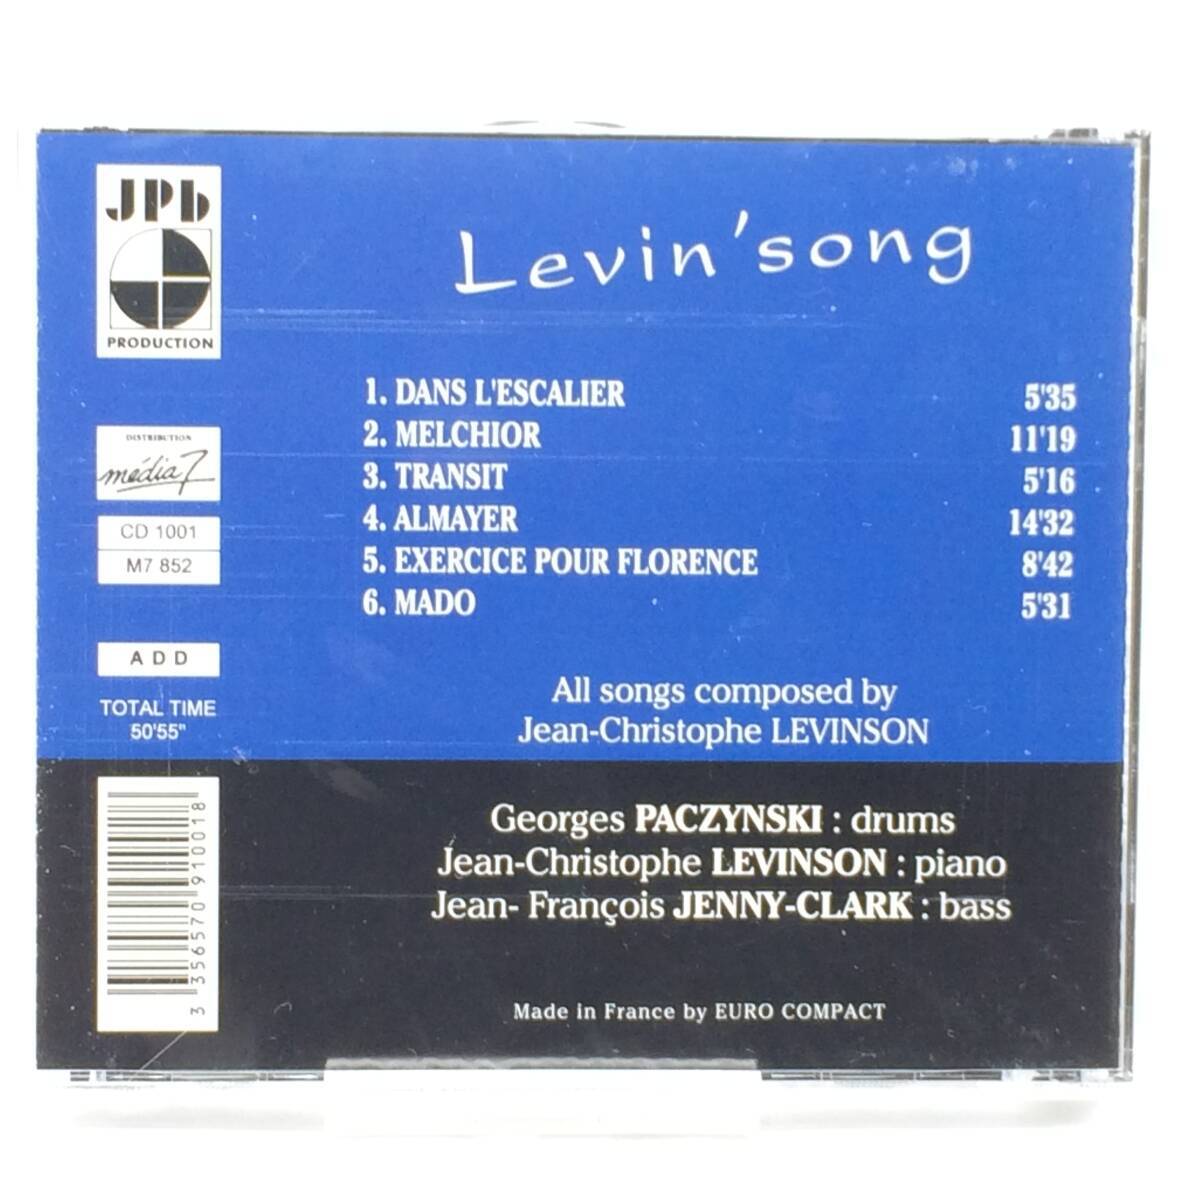 Paczynski Levinson Jenny-Clark / Levin'Song (JPBCD1001) 未開封 オリジナル盤 ピアノトリオ Georges Paczynski J. F. Jenny Clark_画像2